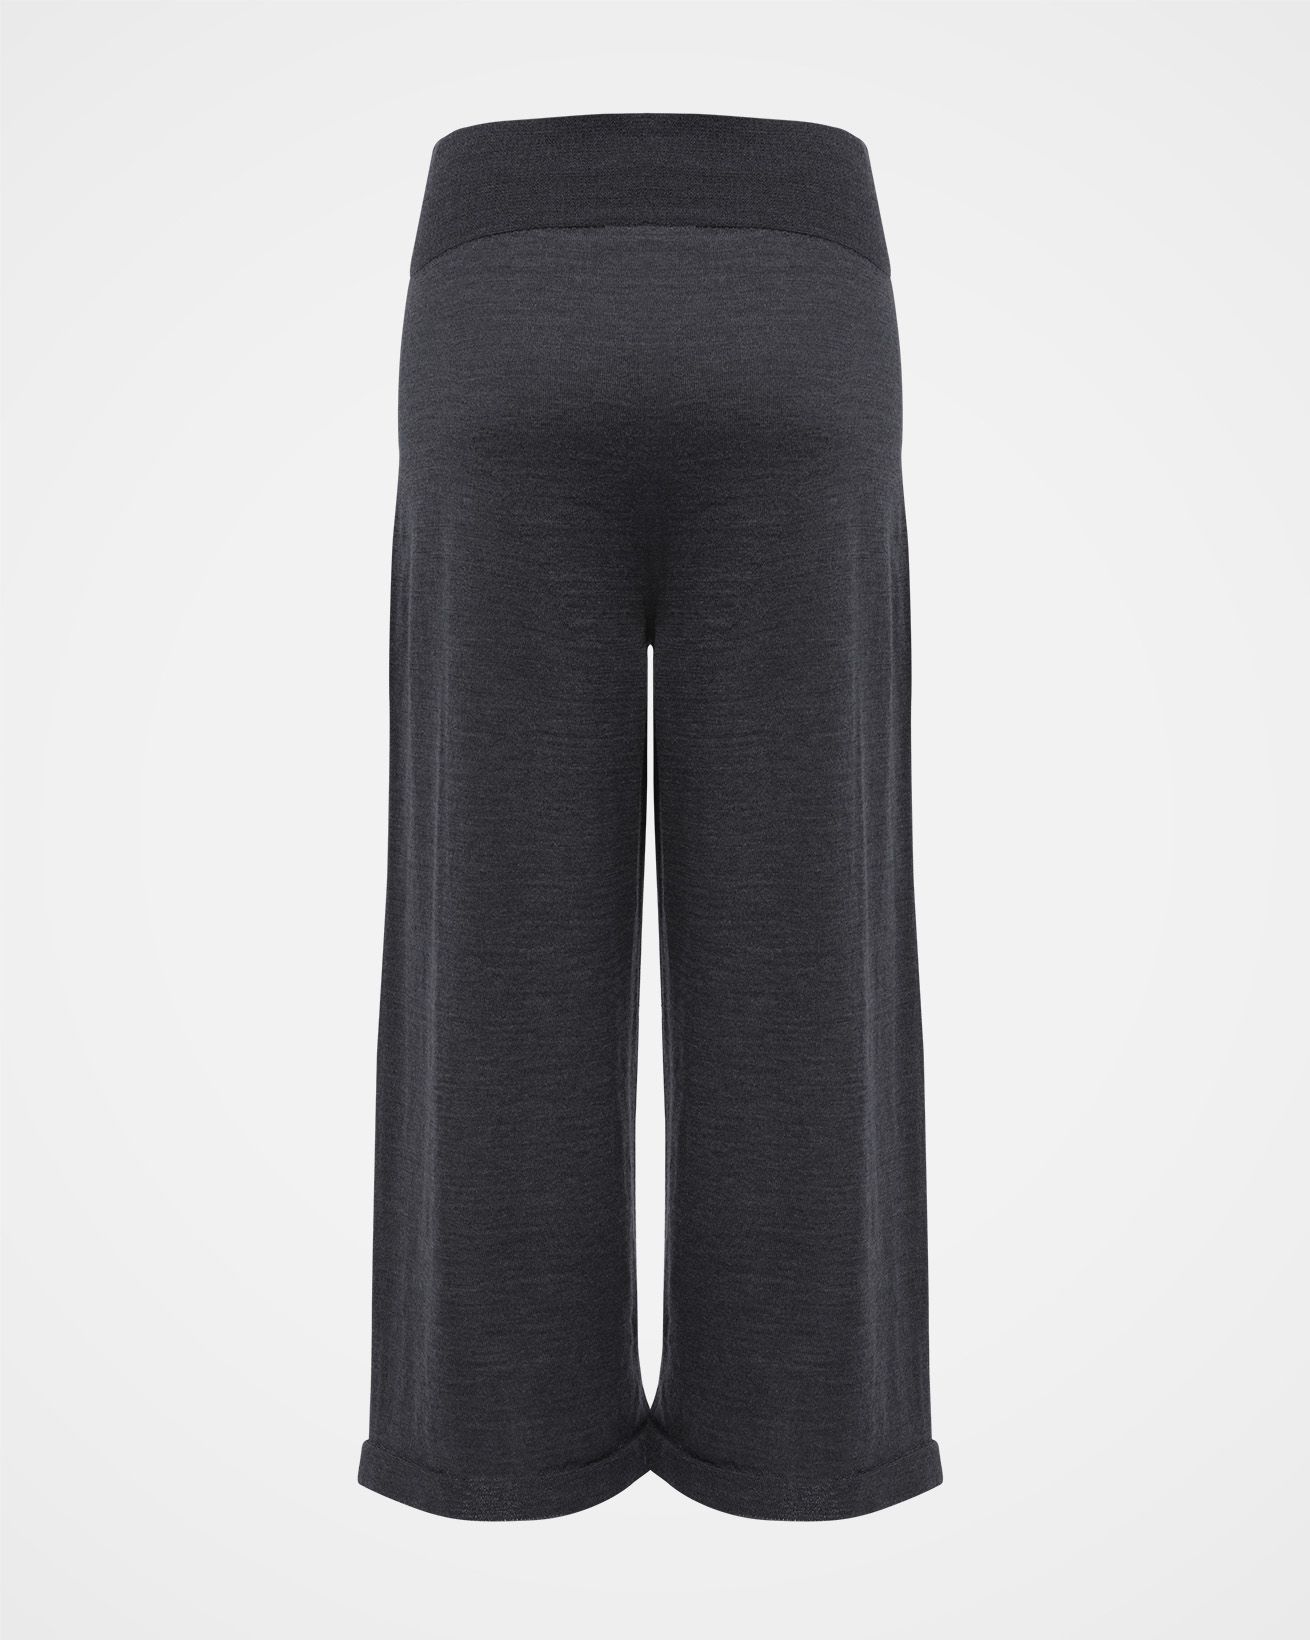 Lululemon drawstring Pants Cropped Womens SIZE 6 - $23 - From Cara